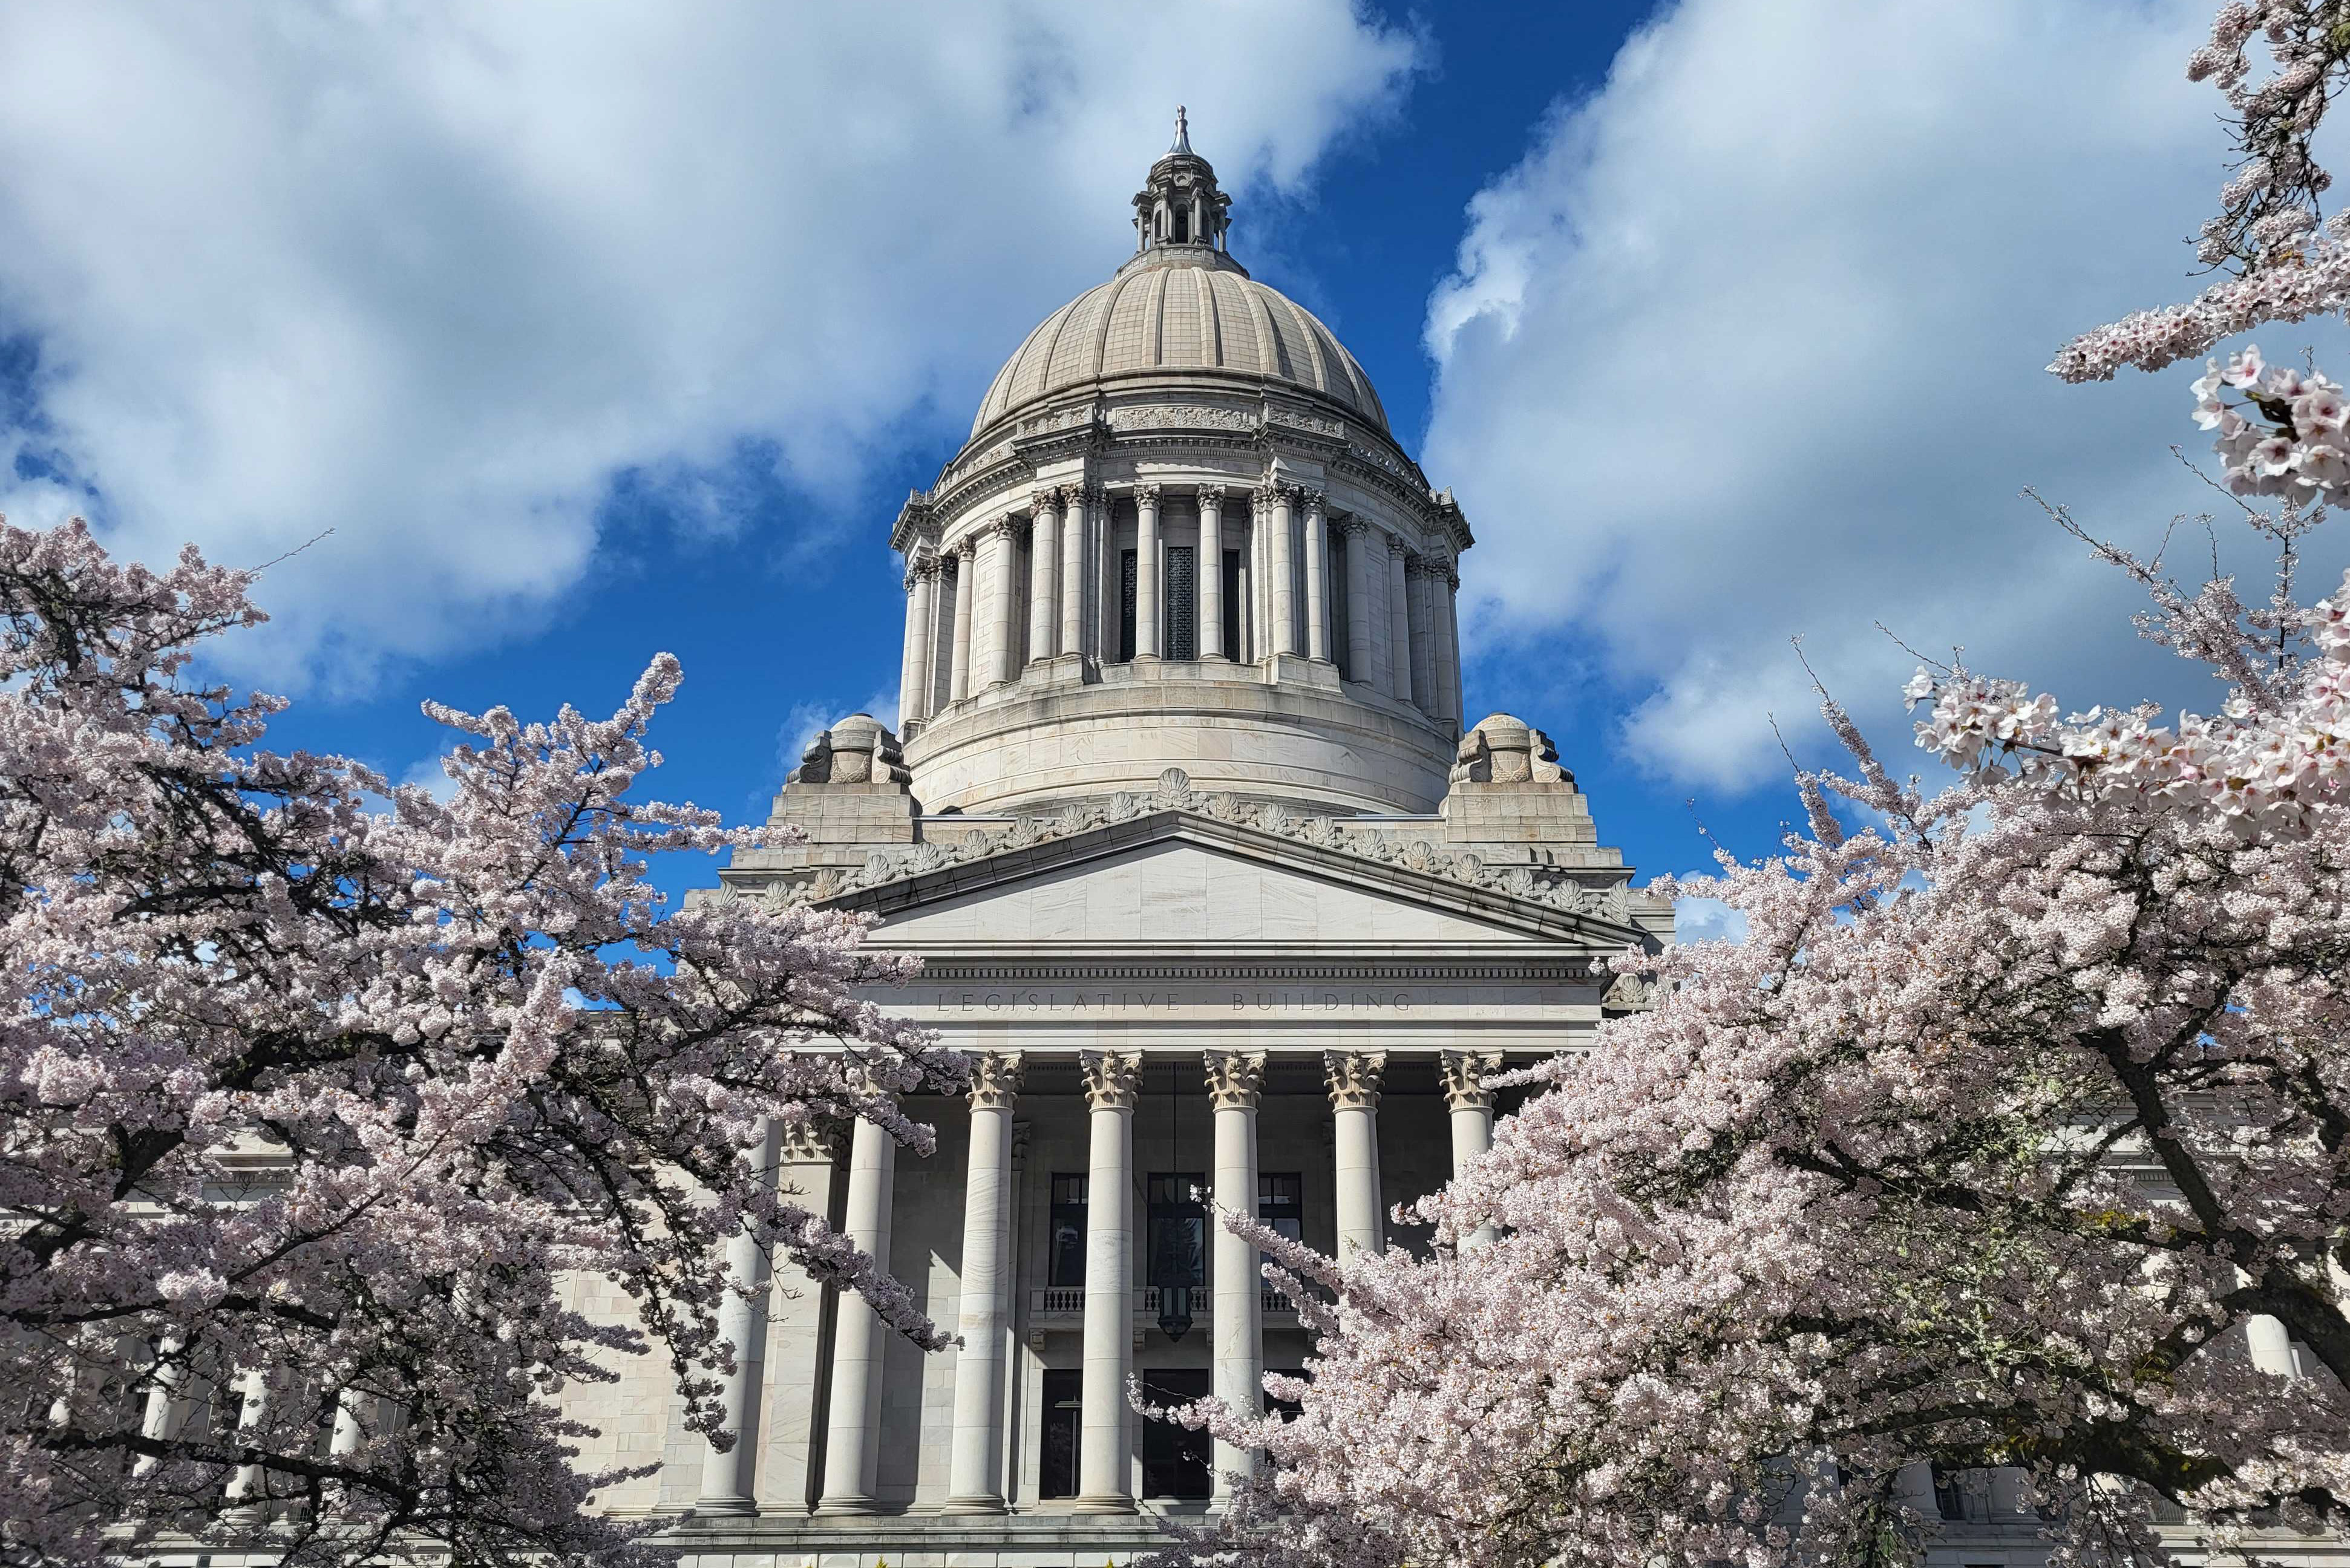 KUOW - Washington's regular legislative session is over. Here are